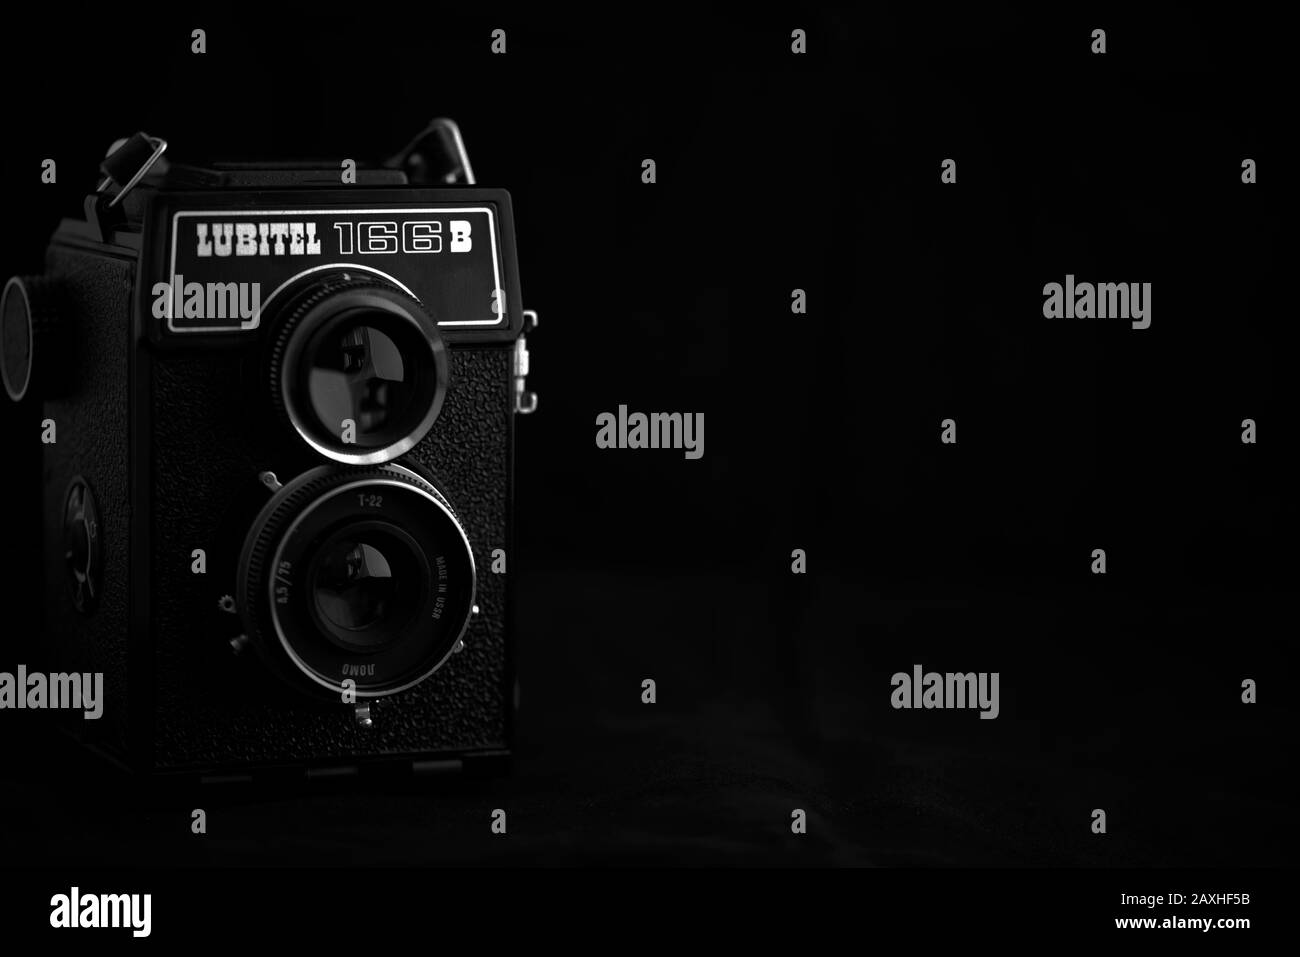 Vintage twin-lens reflex camera, Lubitel 166B, against a dark background. Stock Photo